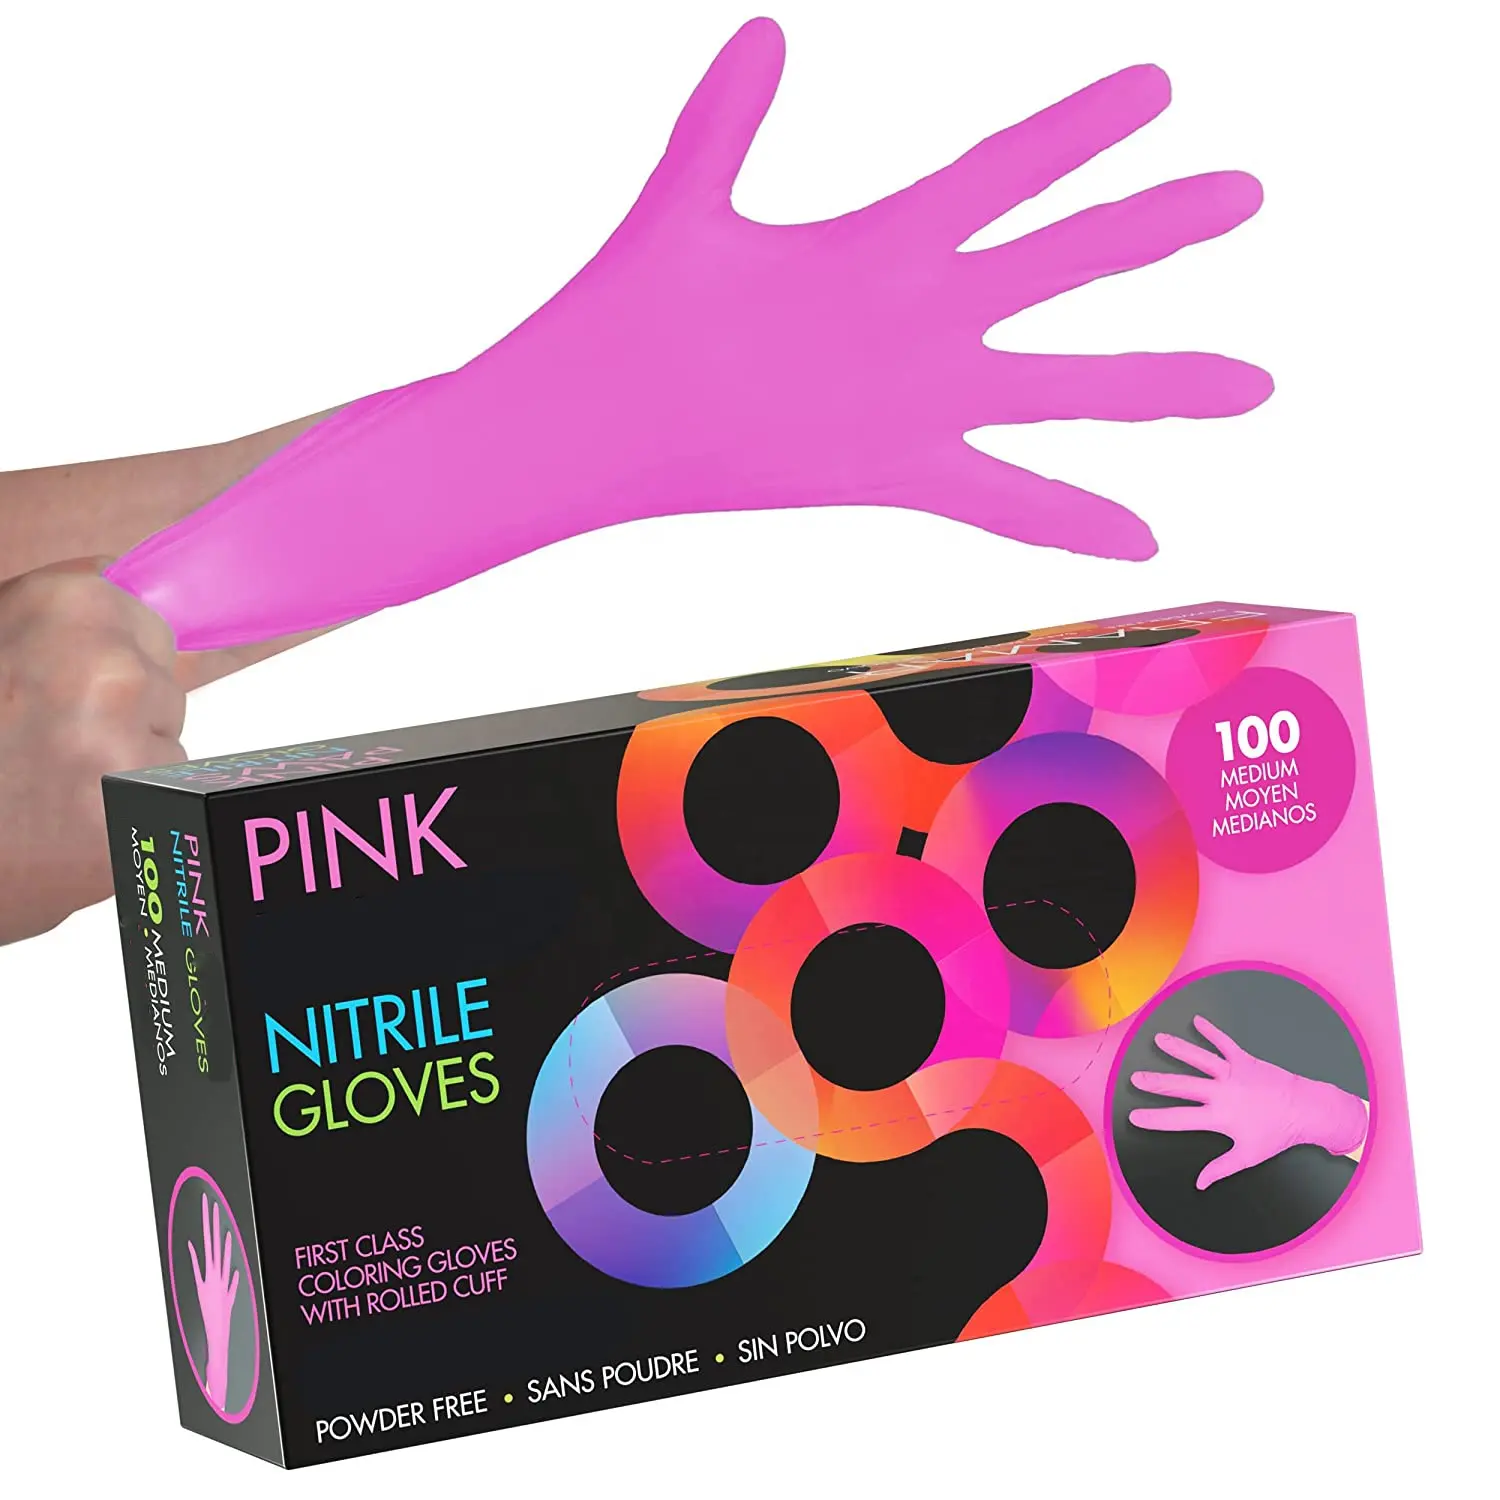 Latex freie Medic Handschuh fach 50 Paar Vinyl nitril mischung Entsorgung Rosa Pfoten Nitril Rosa Handschuhe